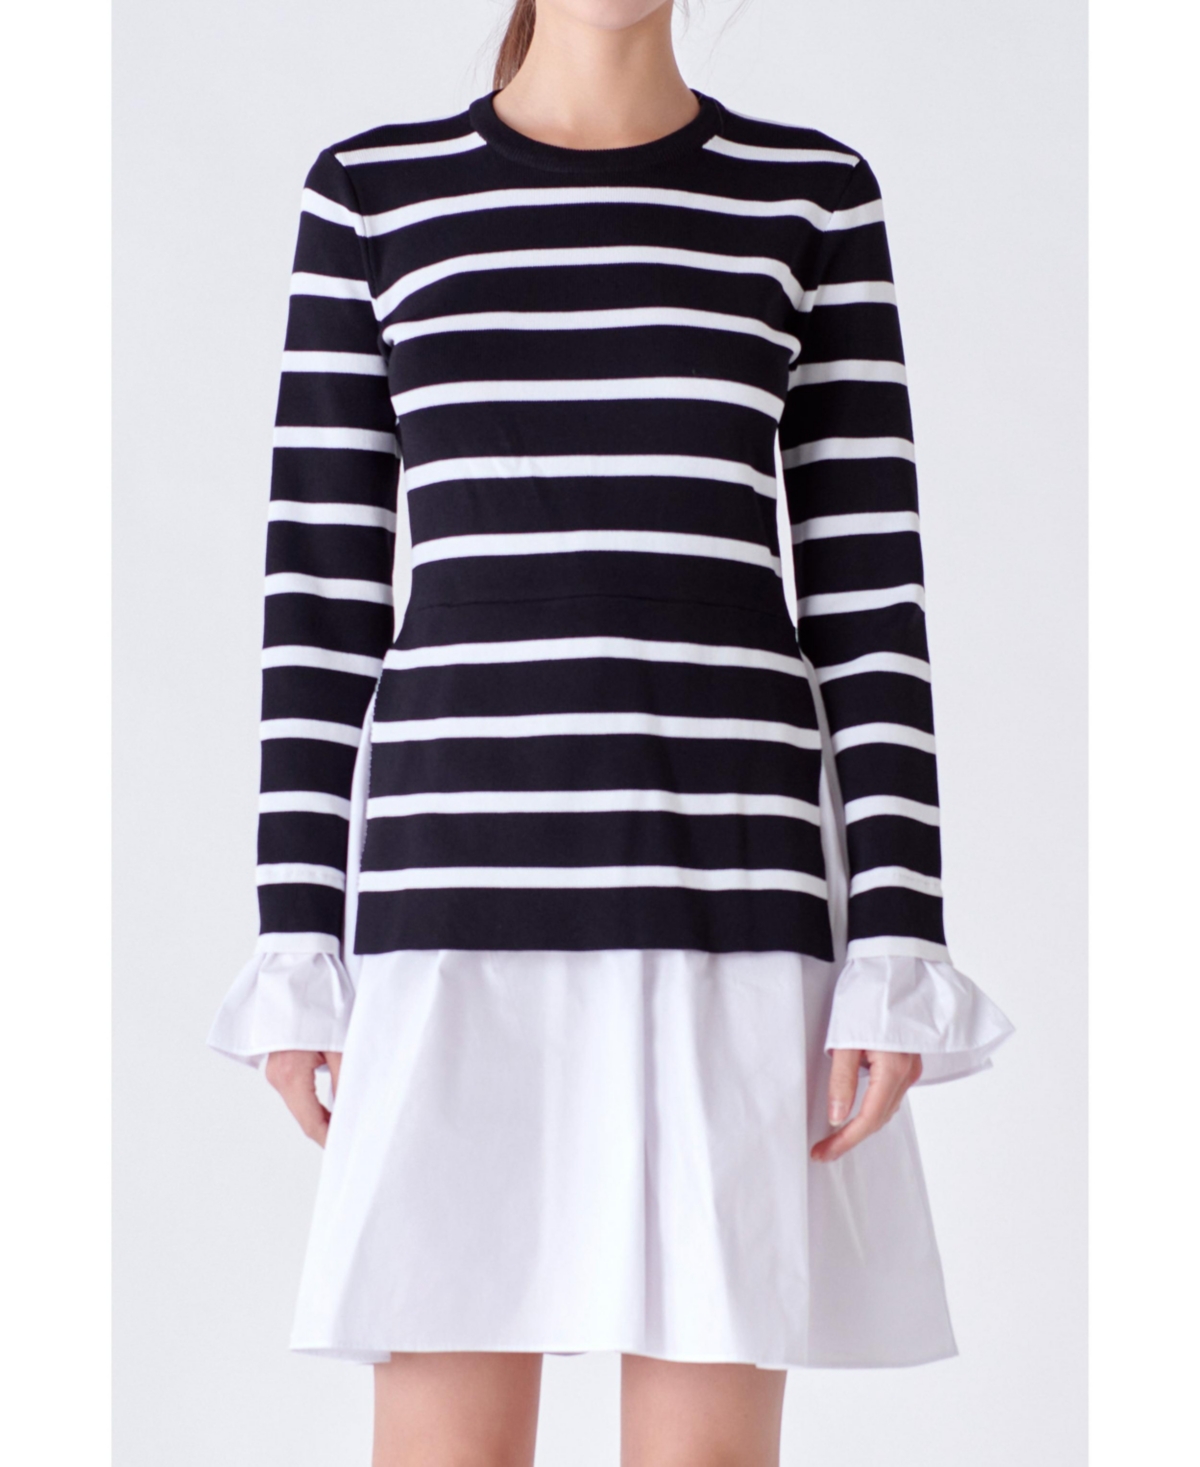 Buy Boardwalk Empire Inspired Dresses Womens Poplin Combo Knit Dress - Black stripe $90.00 AT vintagedancer.com